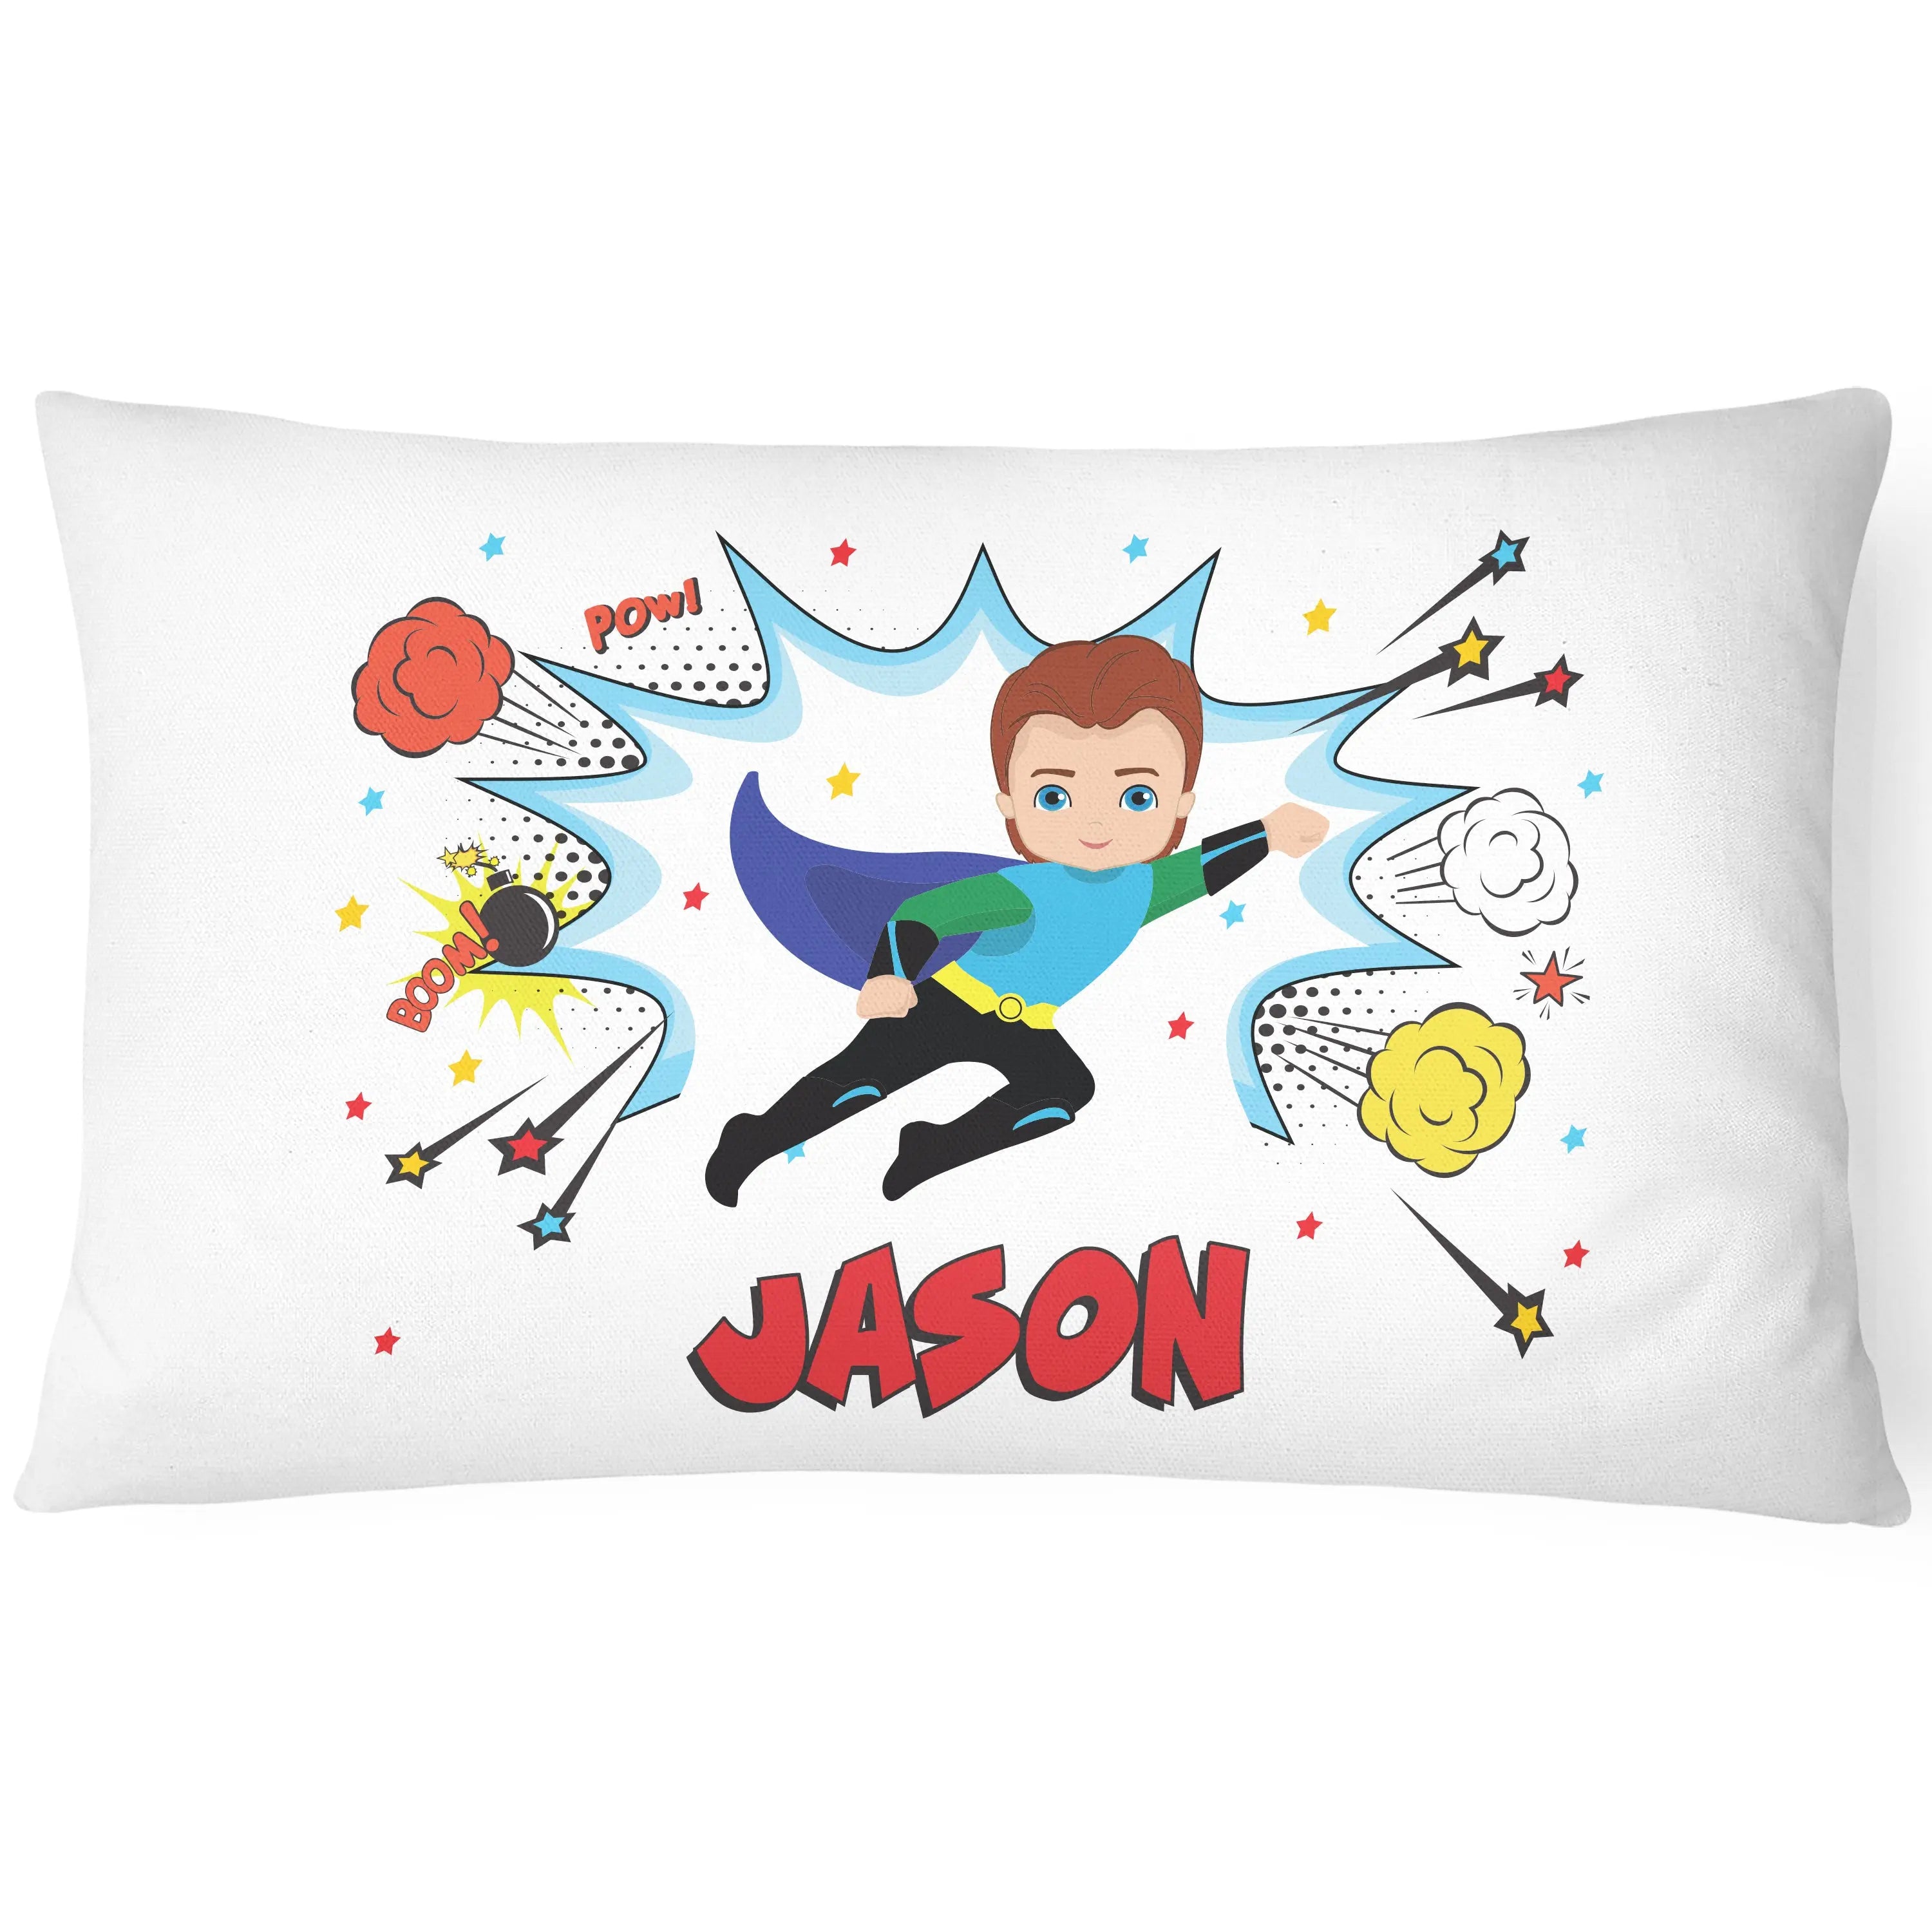 Personalised SuperHero Pillowcase - Power - CushionPop